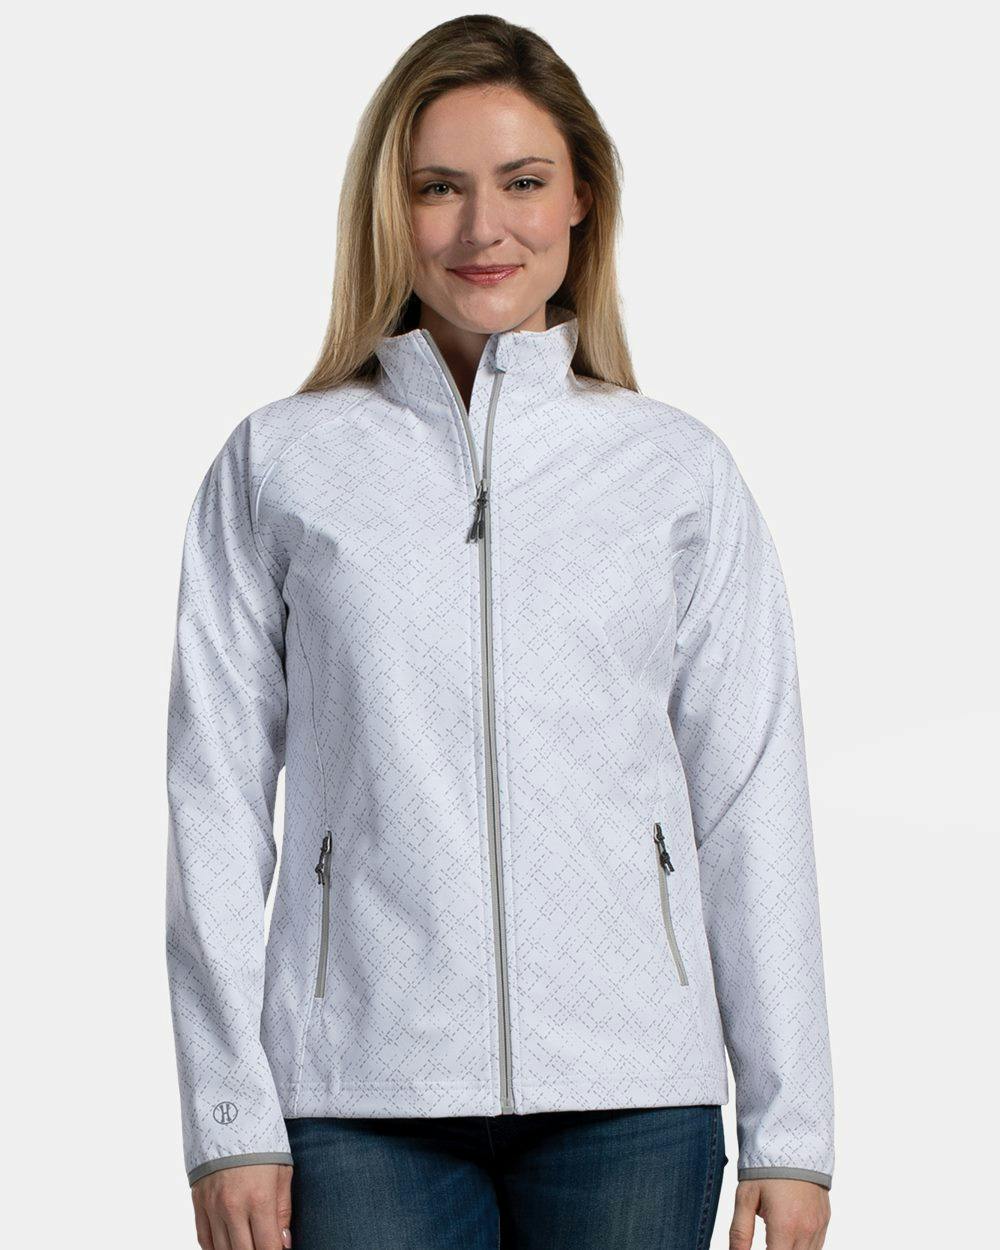 Image for Women's Featherlight Softshell Jacket - 229721